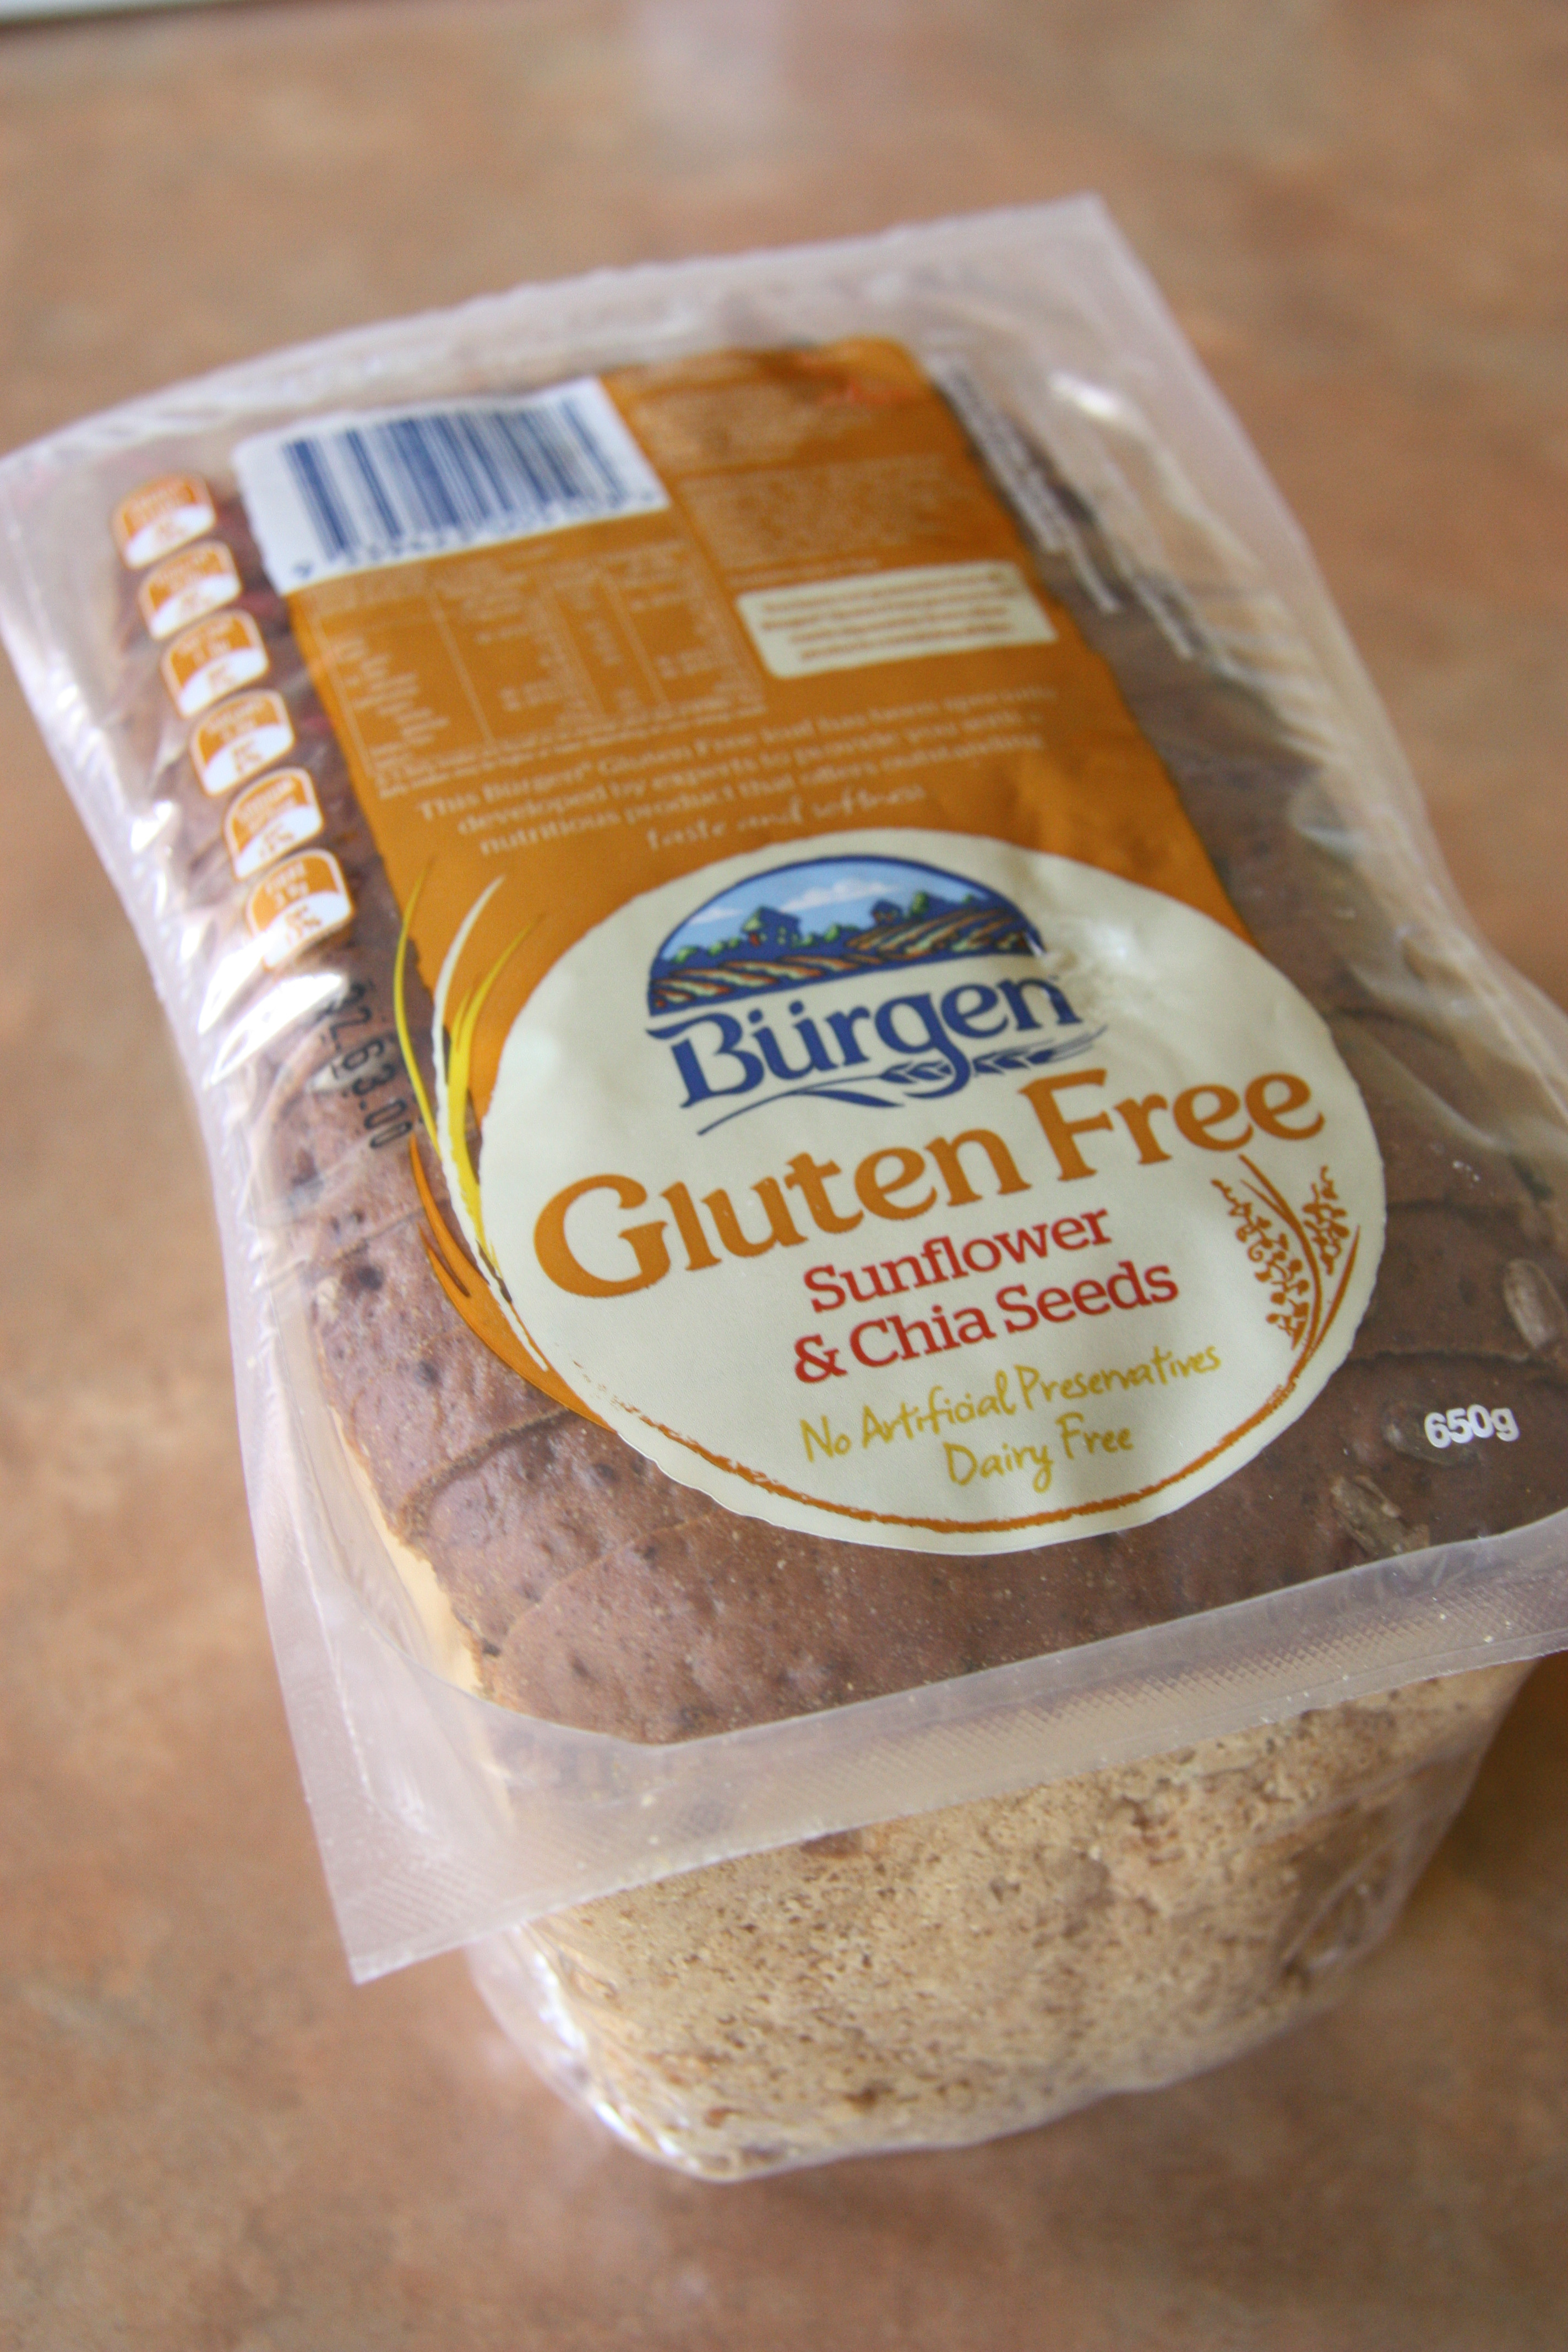 Gluten Free And Dairy Free Bread
 Burgen Sunflower & Chia Seeds Gluten Free Bread Review